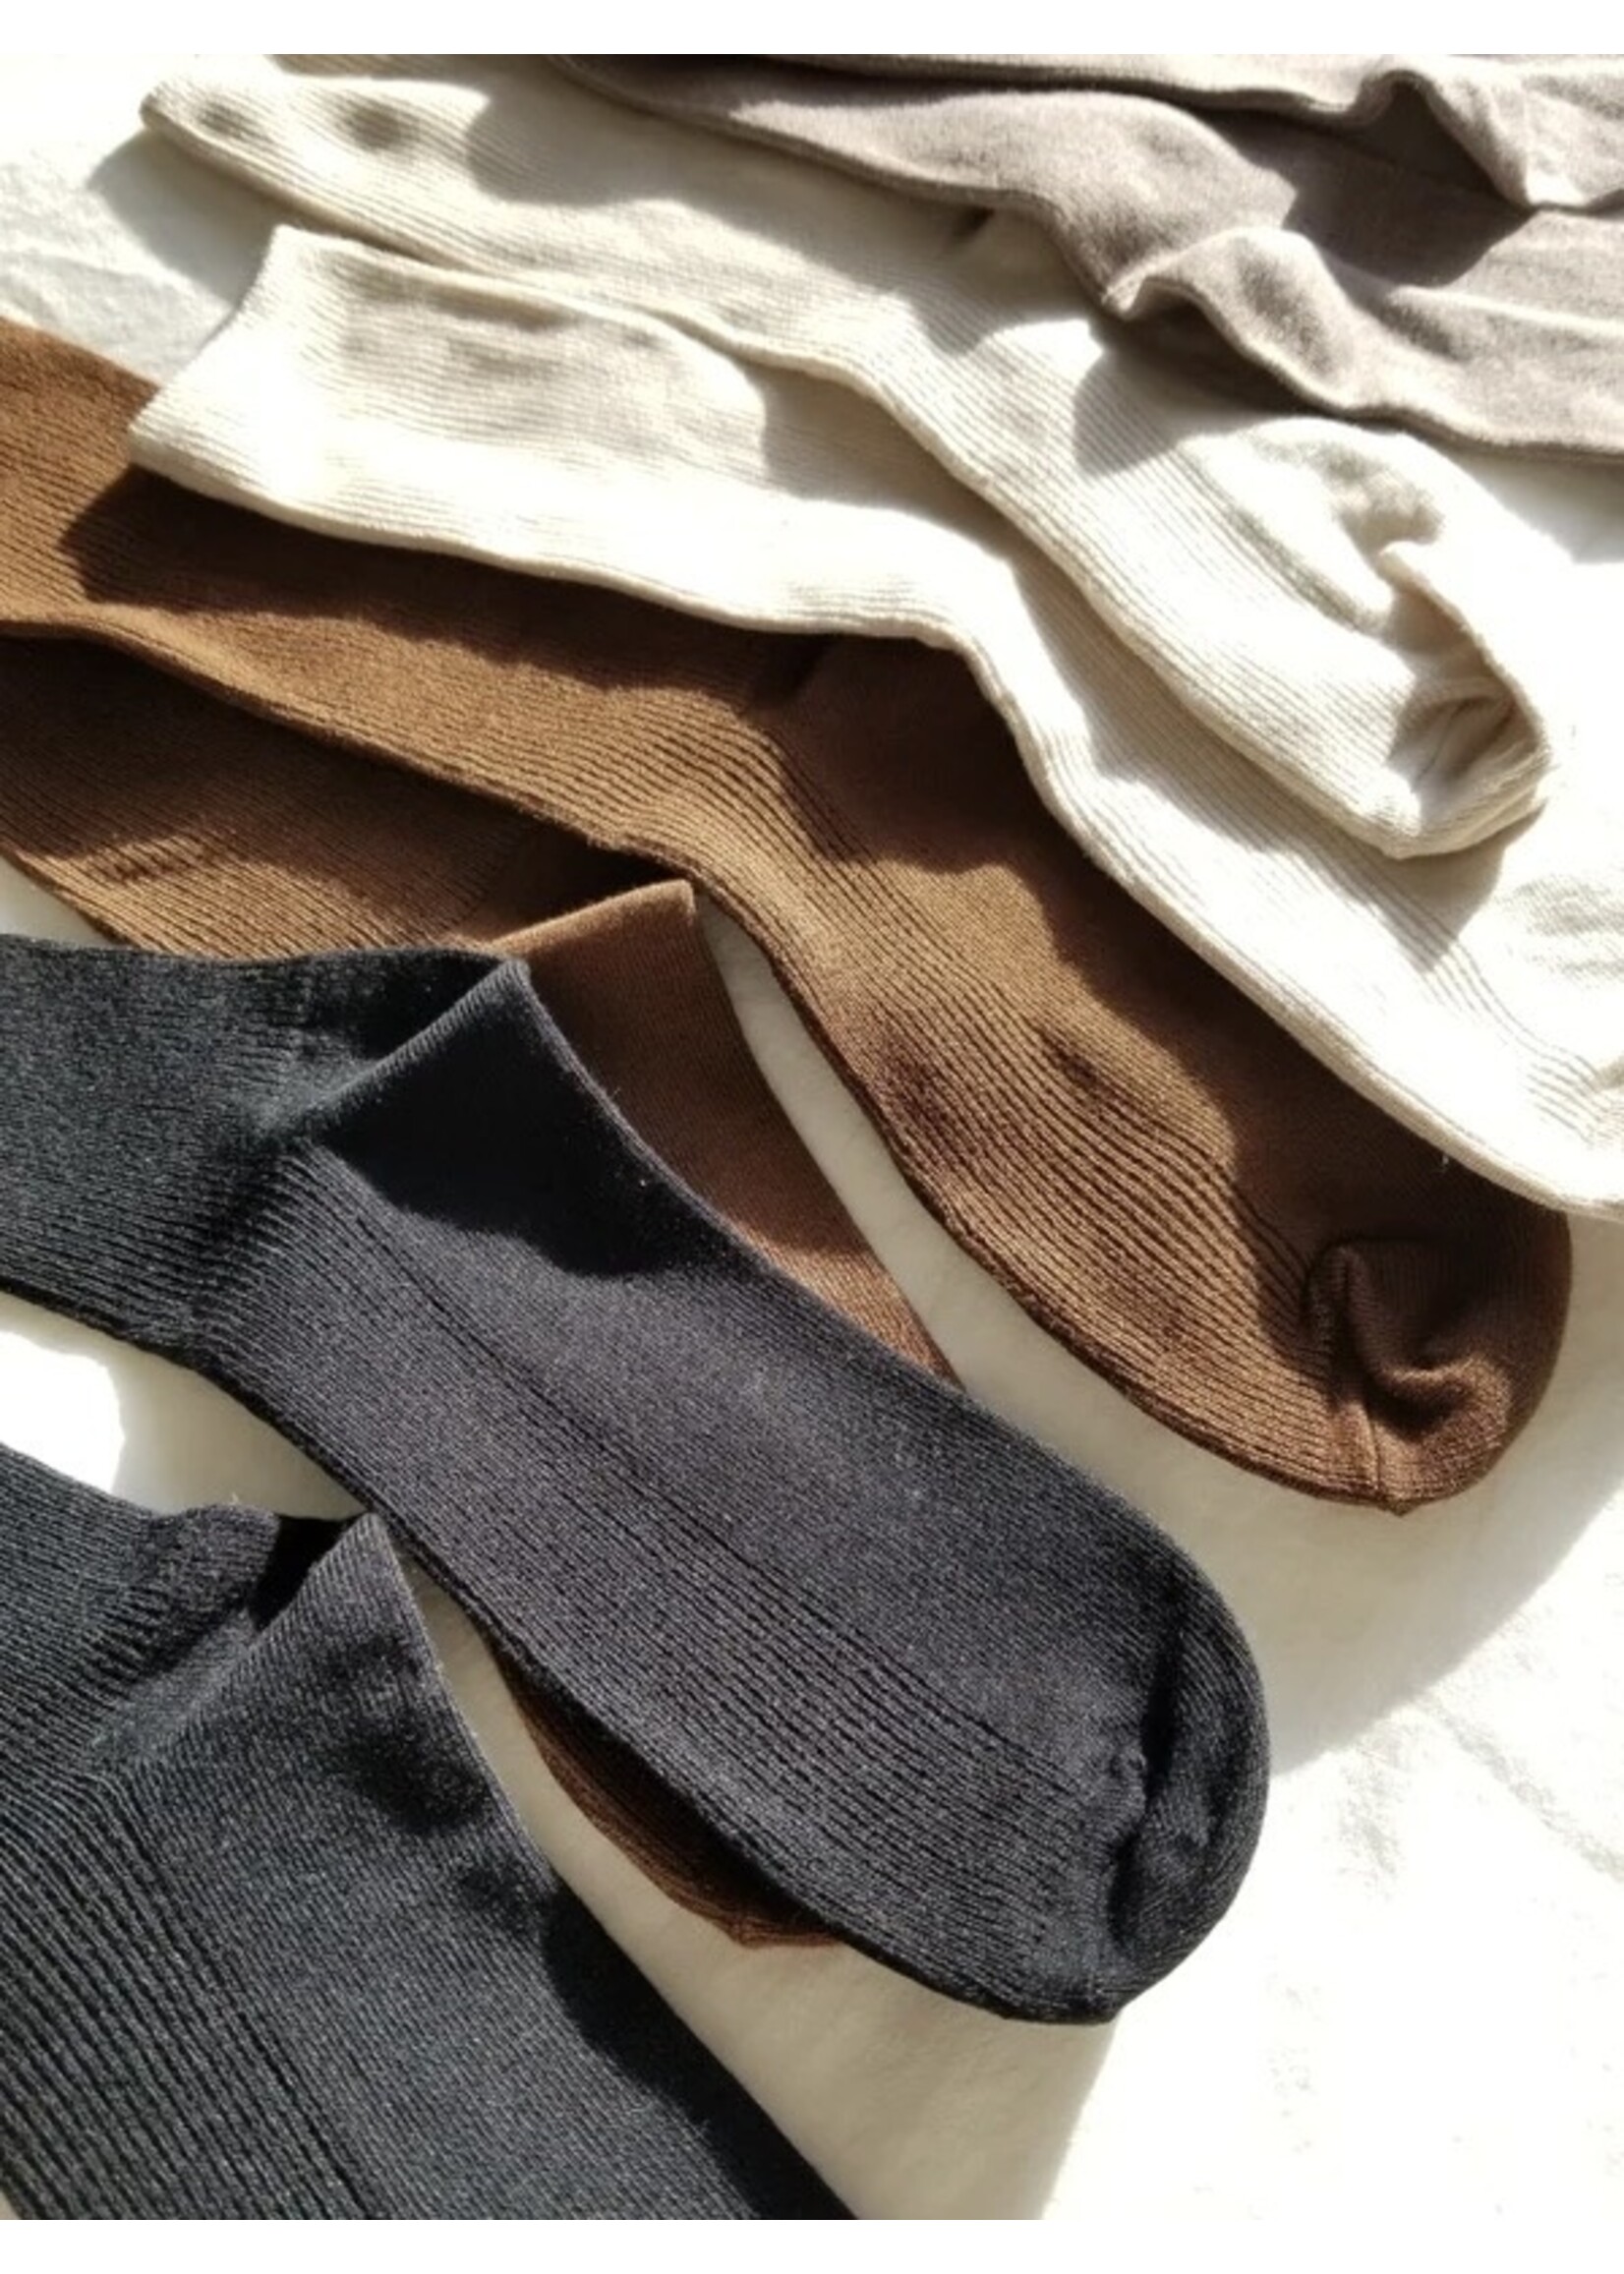 Le Bon Shoppe Trouser socks by Le Bon Shoppe